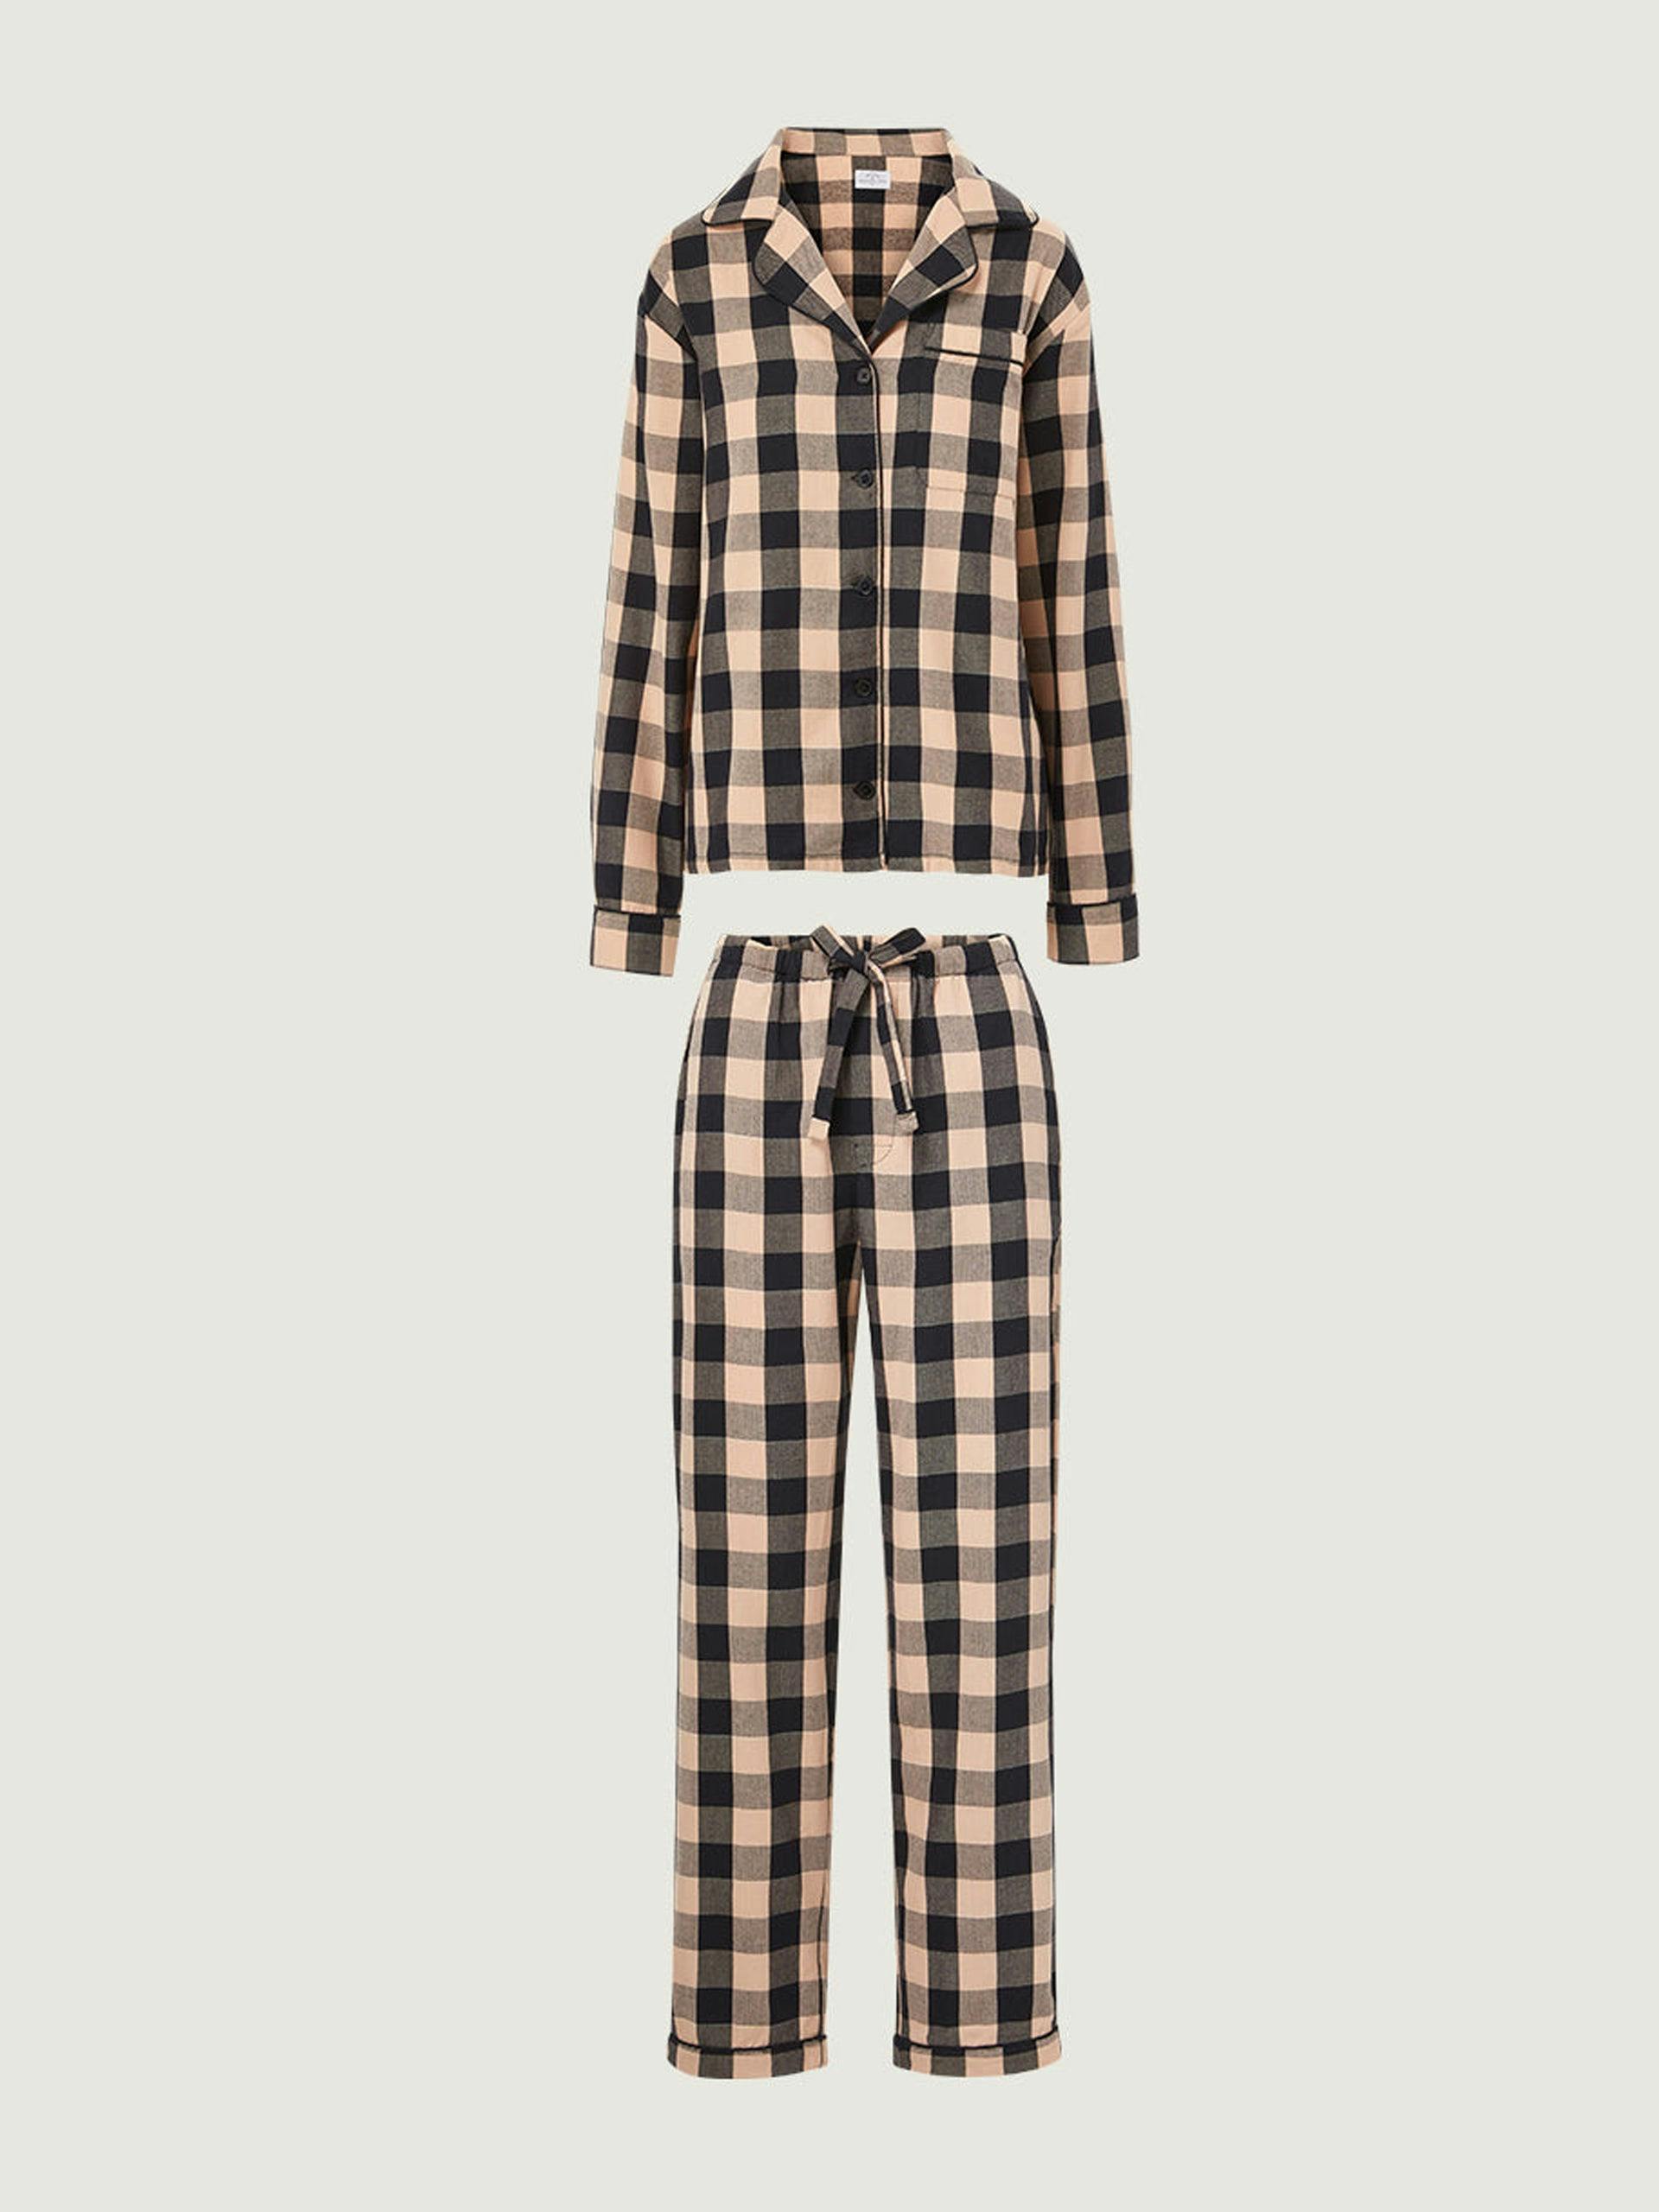 Beige and black checkered pyjama set